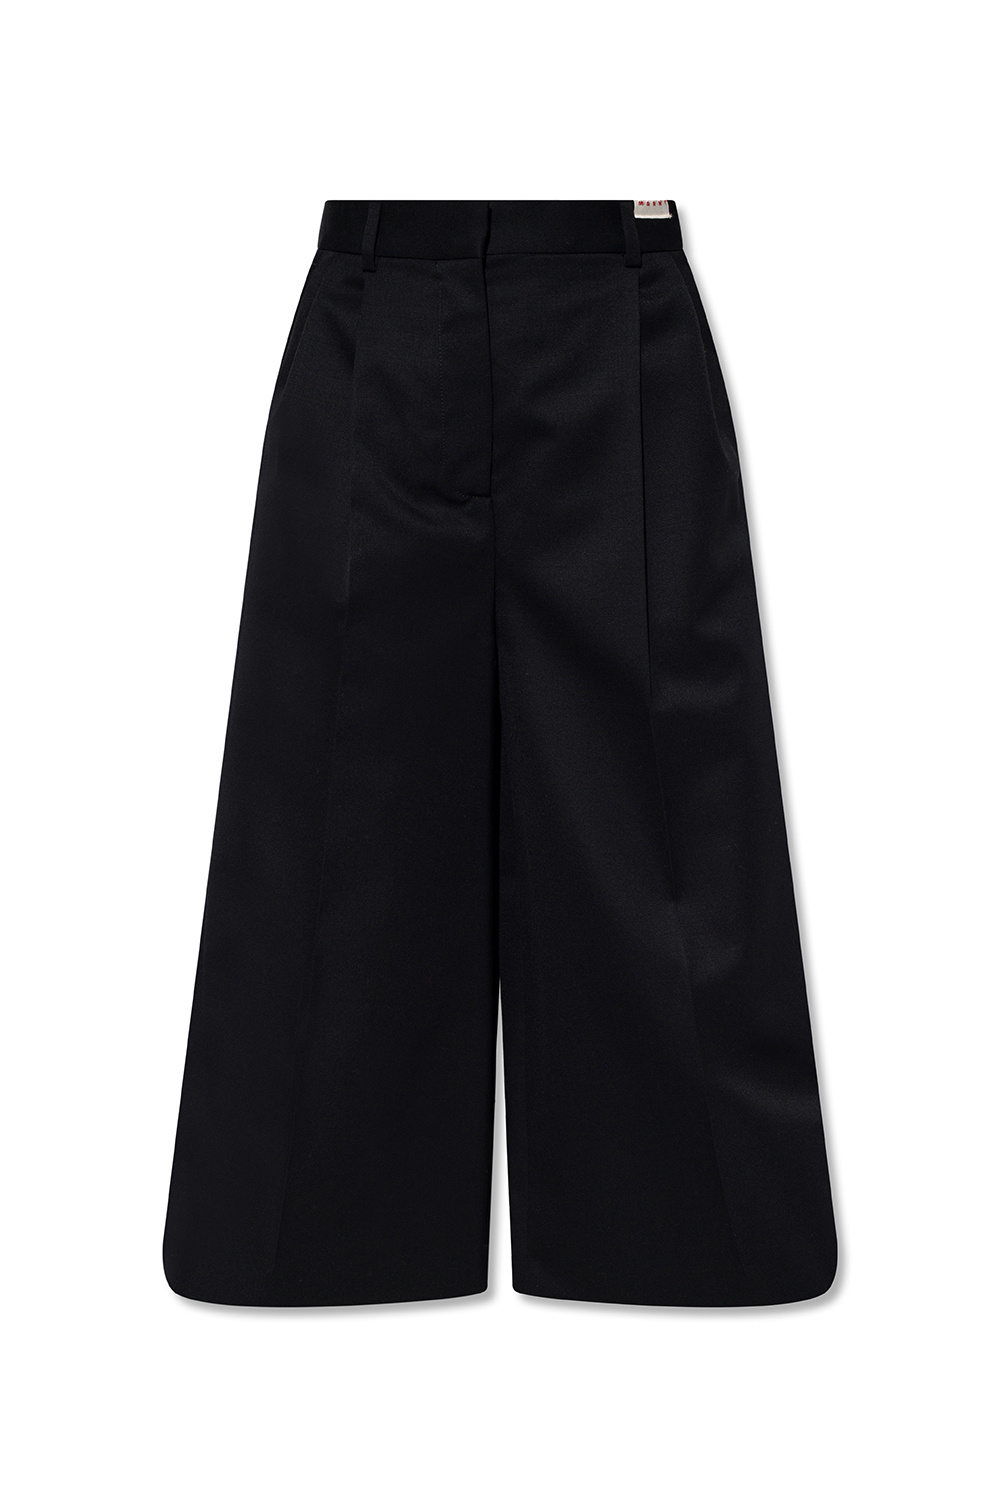 Marni Black Knit Cropped Leggings S Marni | The Luxury Closet